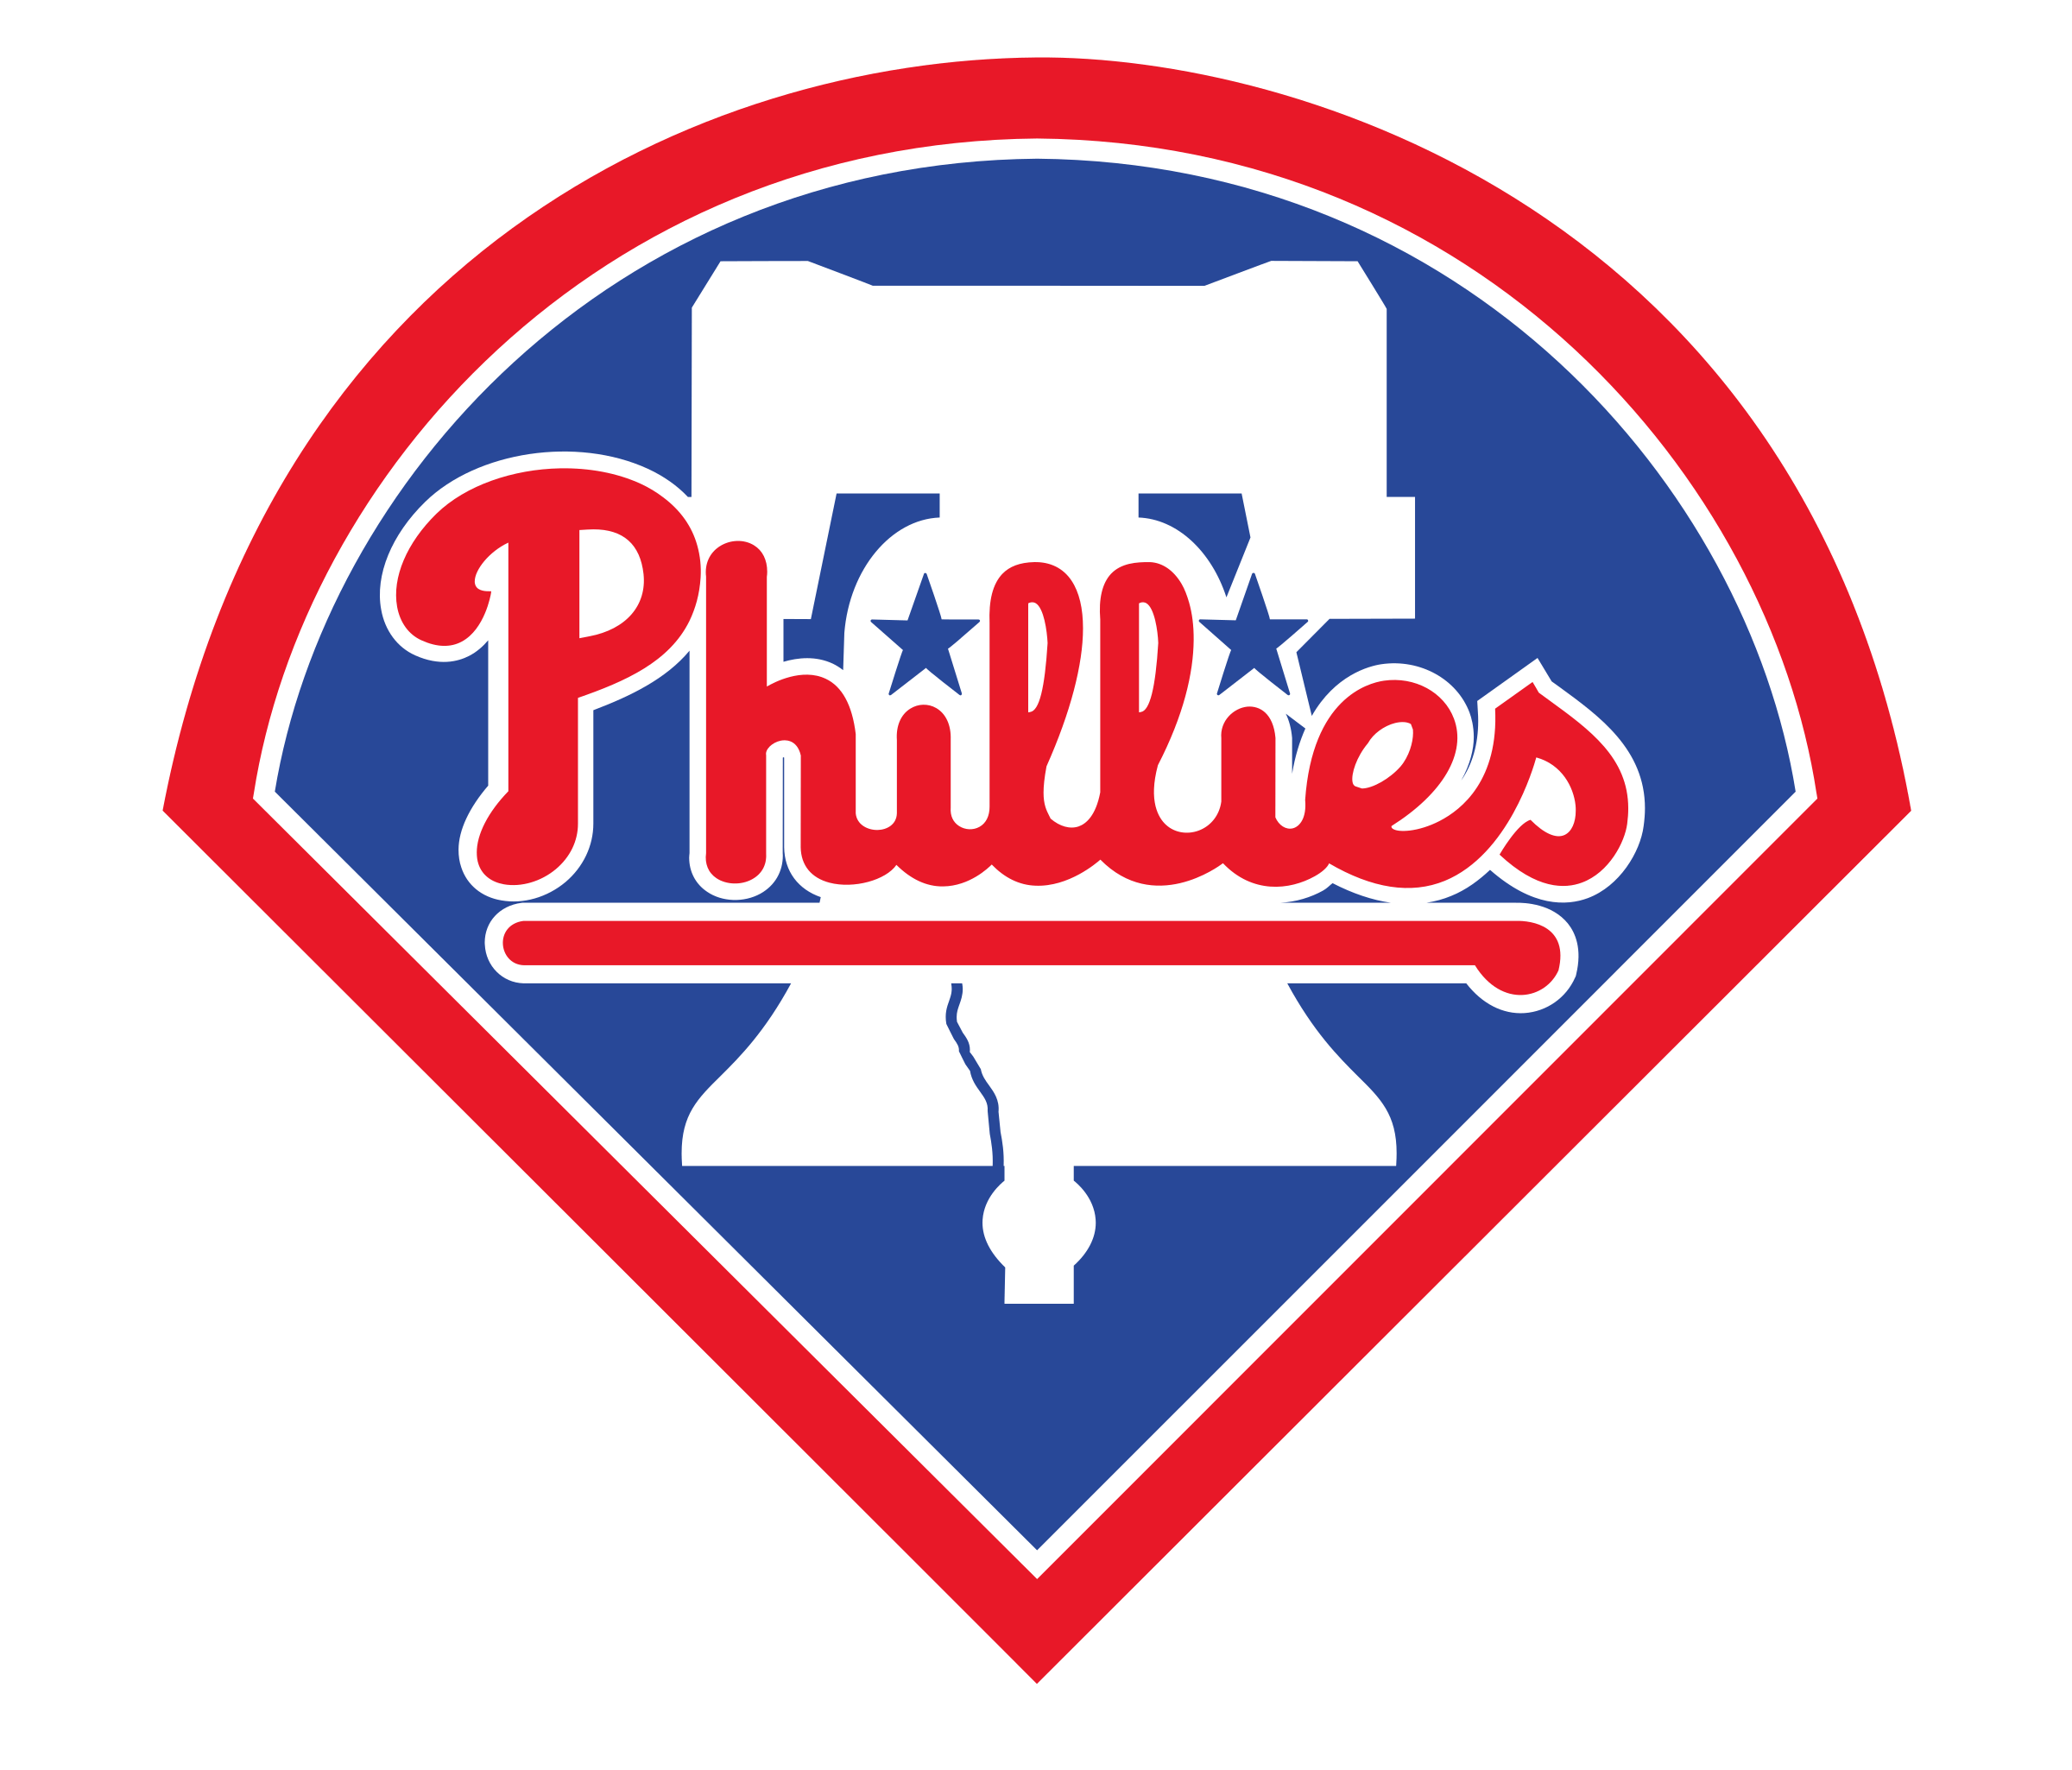 Philadelphia Phillies Logo - Philadelphia Phillies Logo PNG Transparent & SVG Vector - Freebie Supply